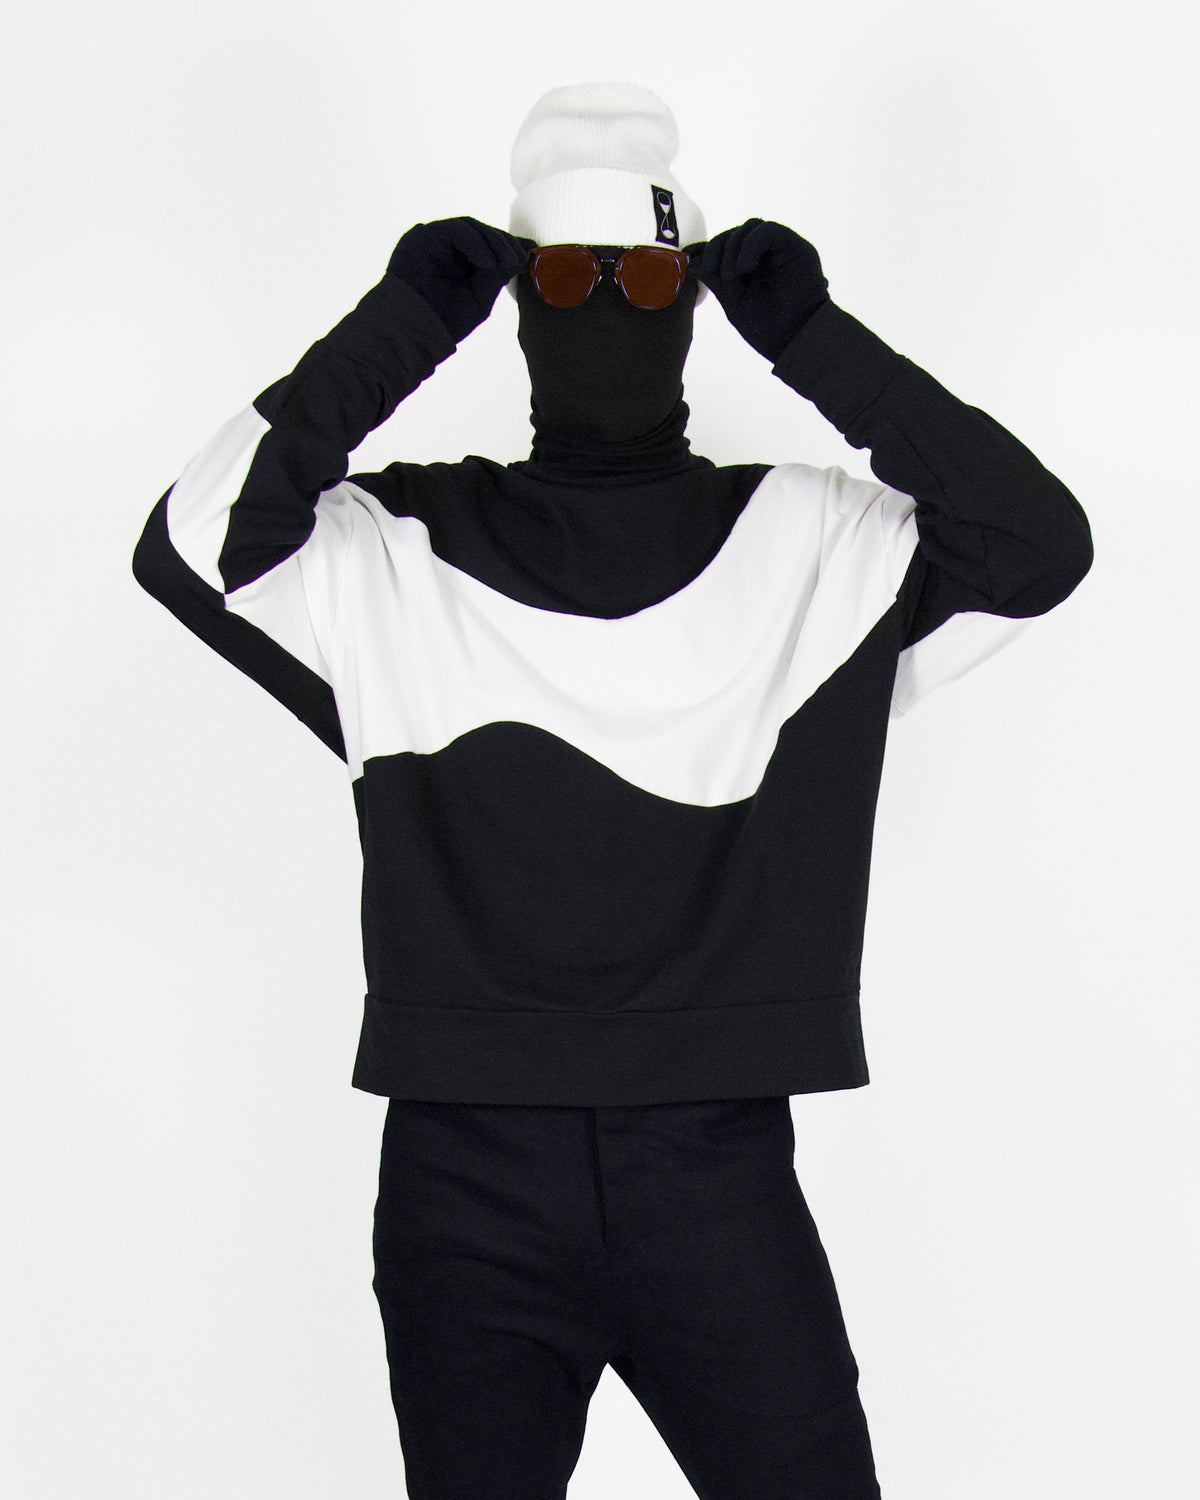 Pan Sweatshirt - Black and White